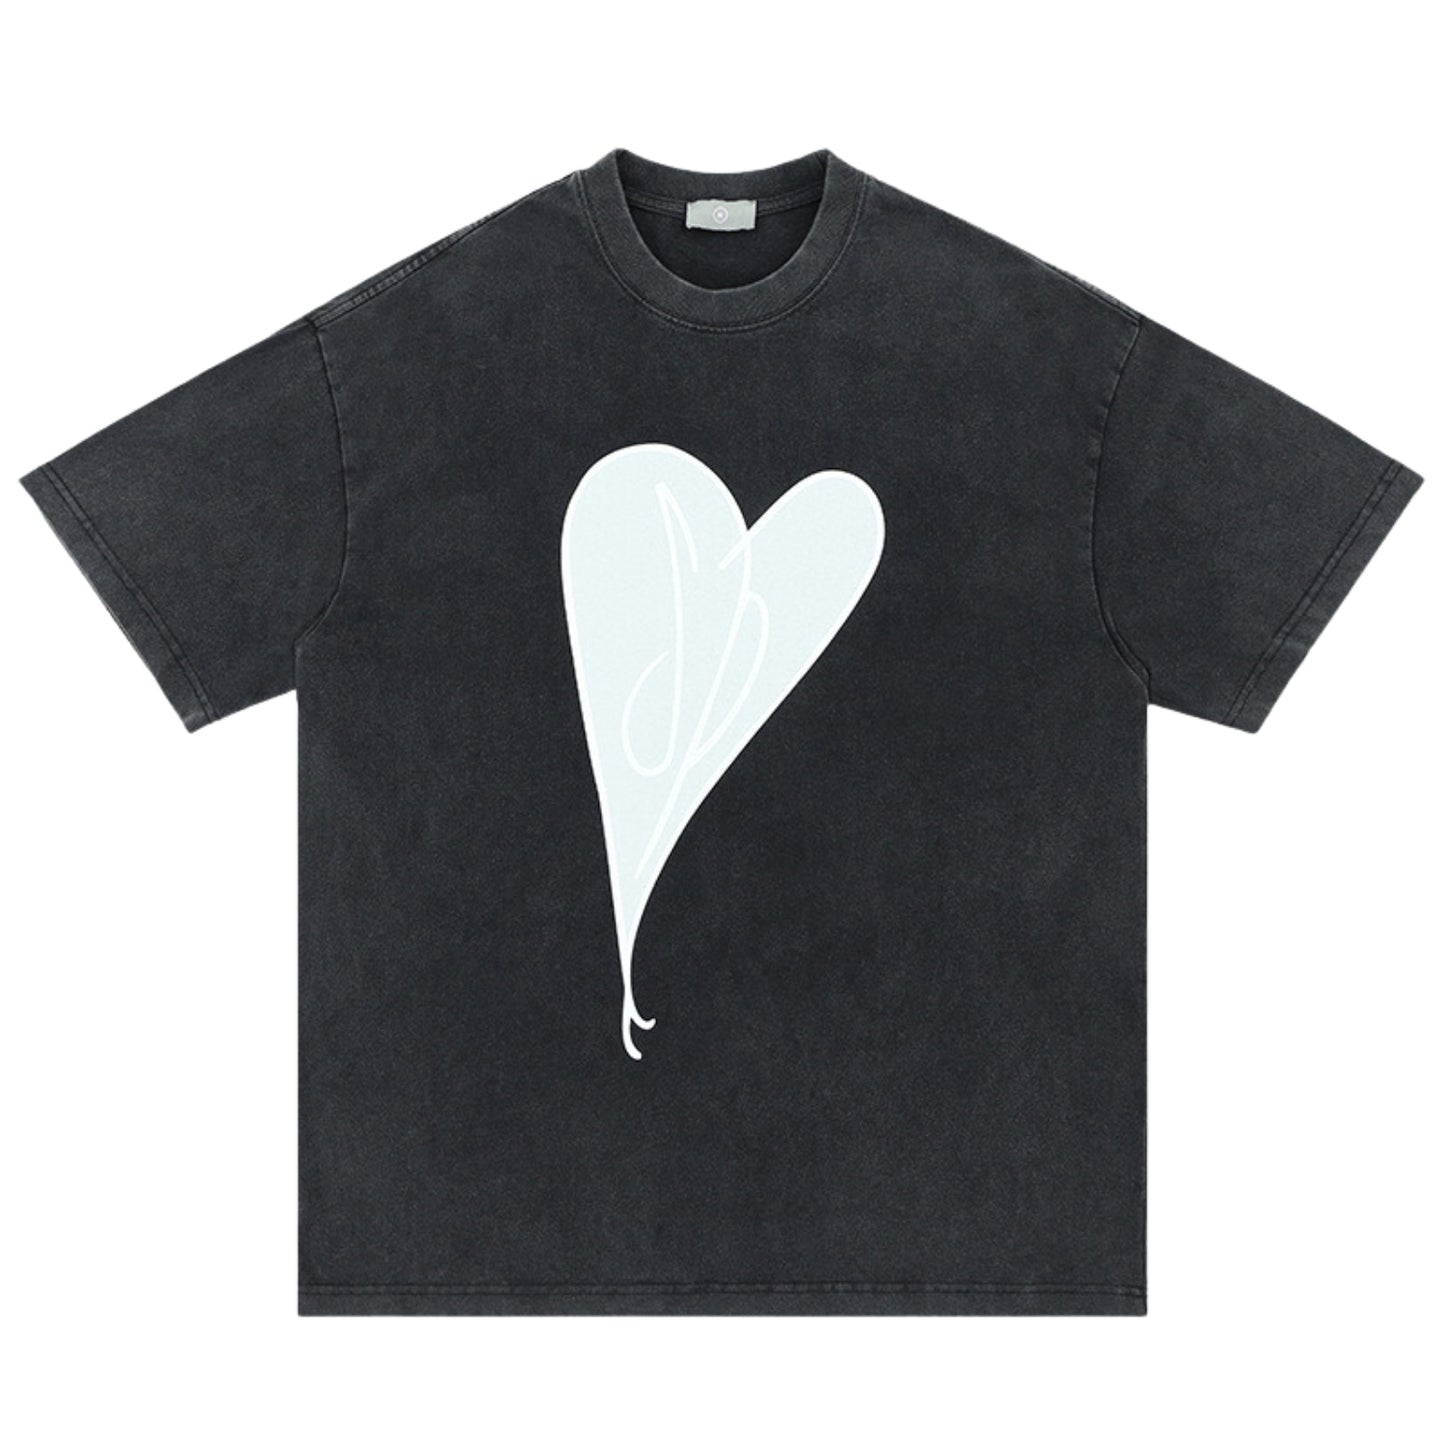 Mellon Collie And The Infinite Sadness T-shirt